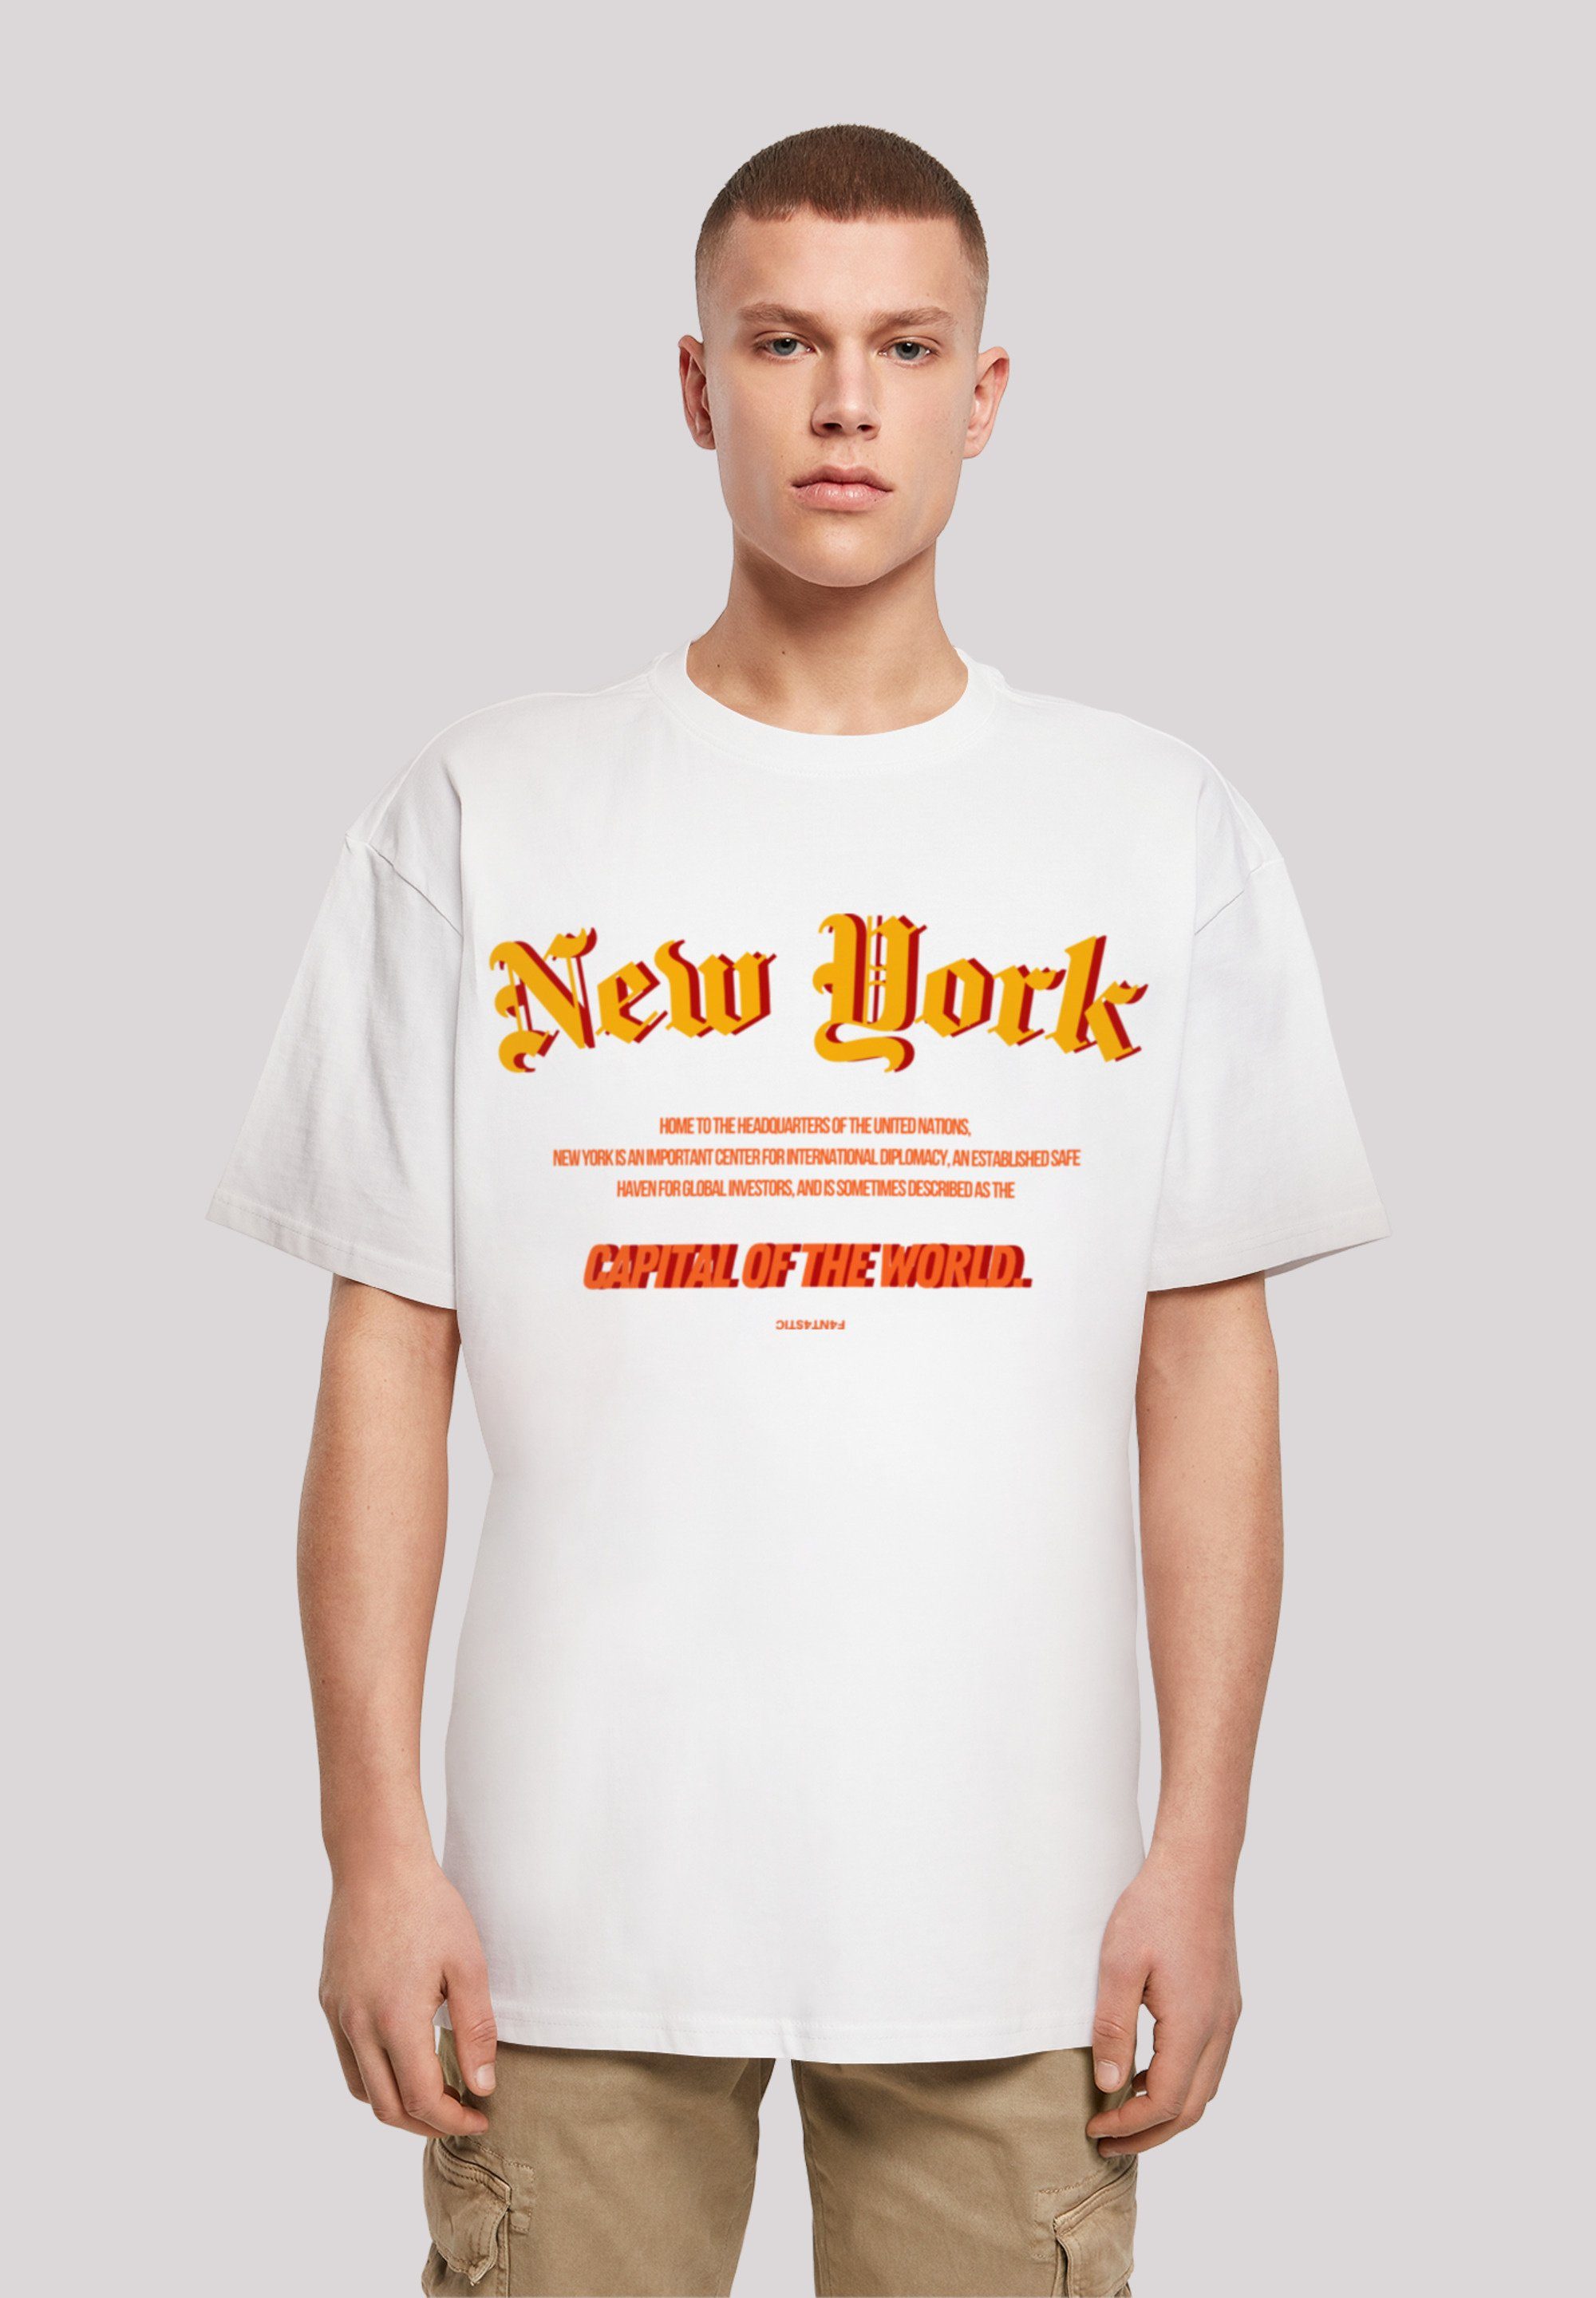 New weiß York T-Shirt TEE F4NT4STIC OVERSIZE Print